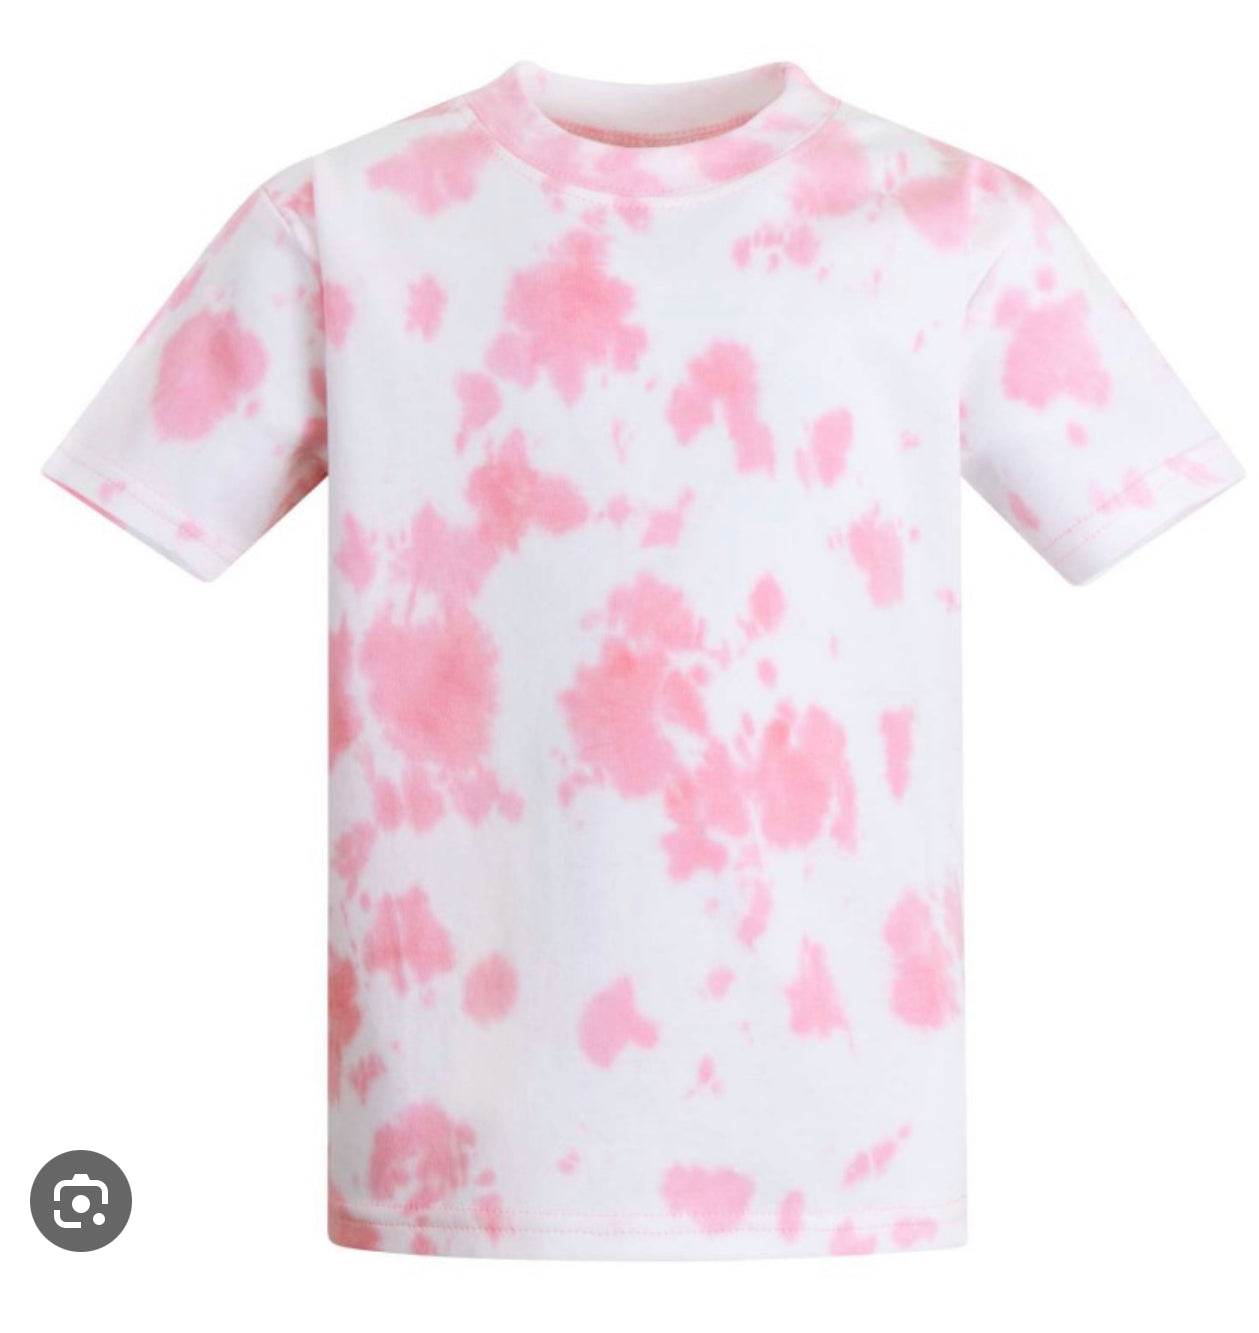 Personalised Pink Tye dye T-Shirts